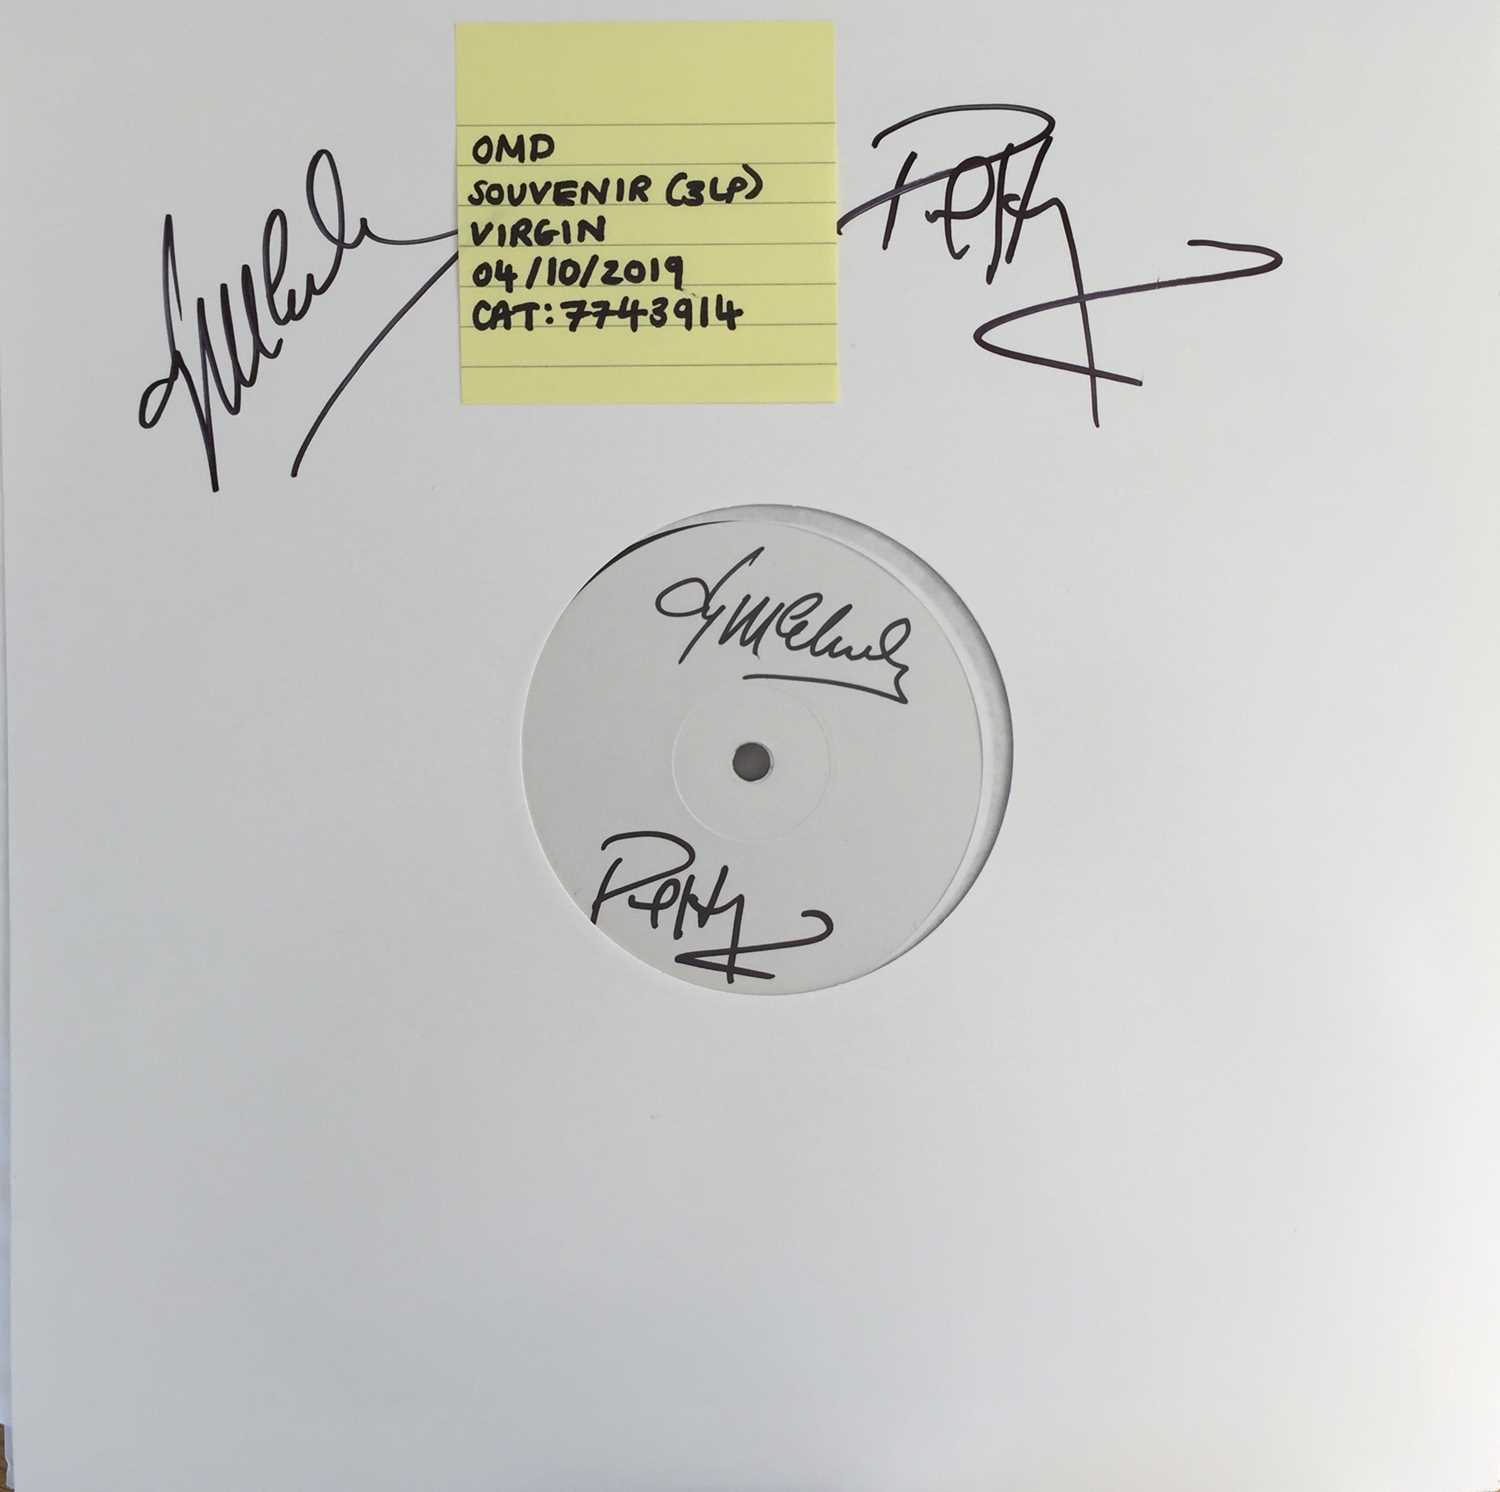 Lot 31 - OMD - SOUVENIR LP - SIGNED BY ANDY MCCLUSKEY/PAUL HUMPHREYS (2019 - UMC/VIRGIN EMI - 7743914)